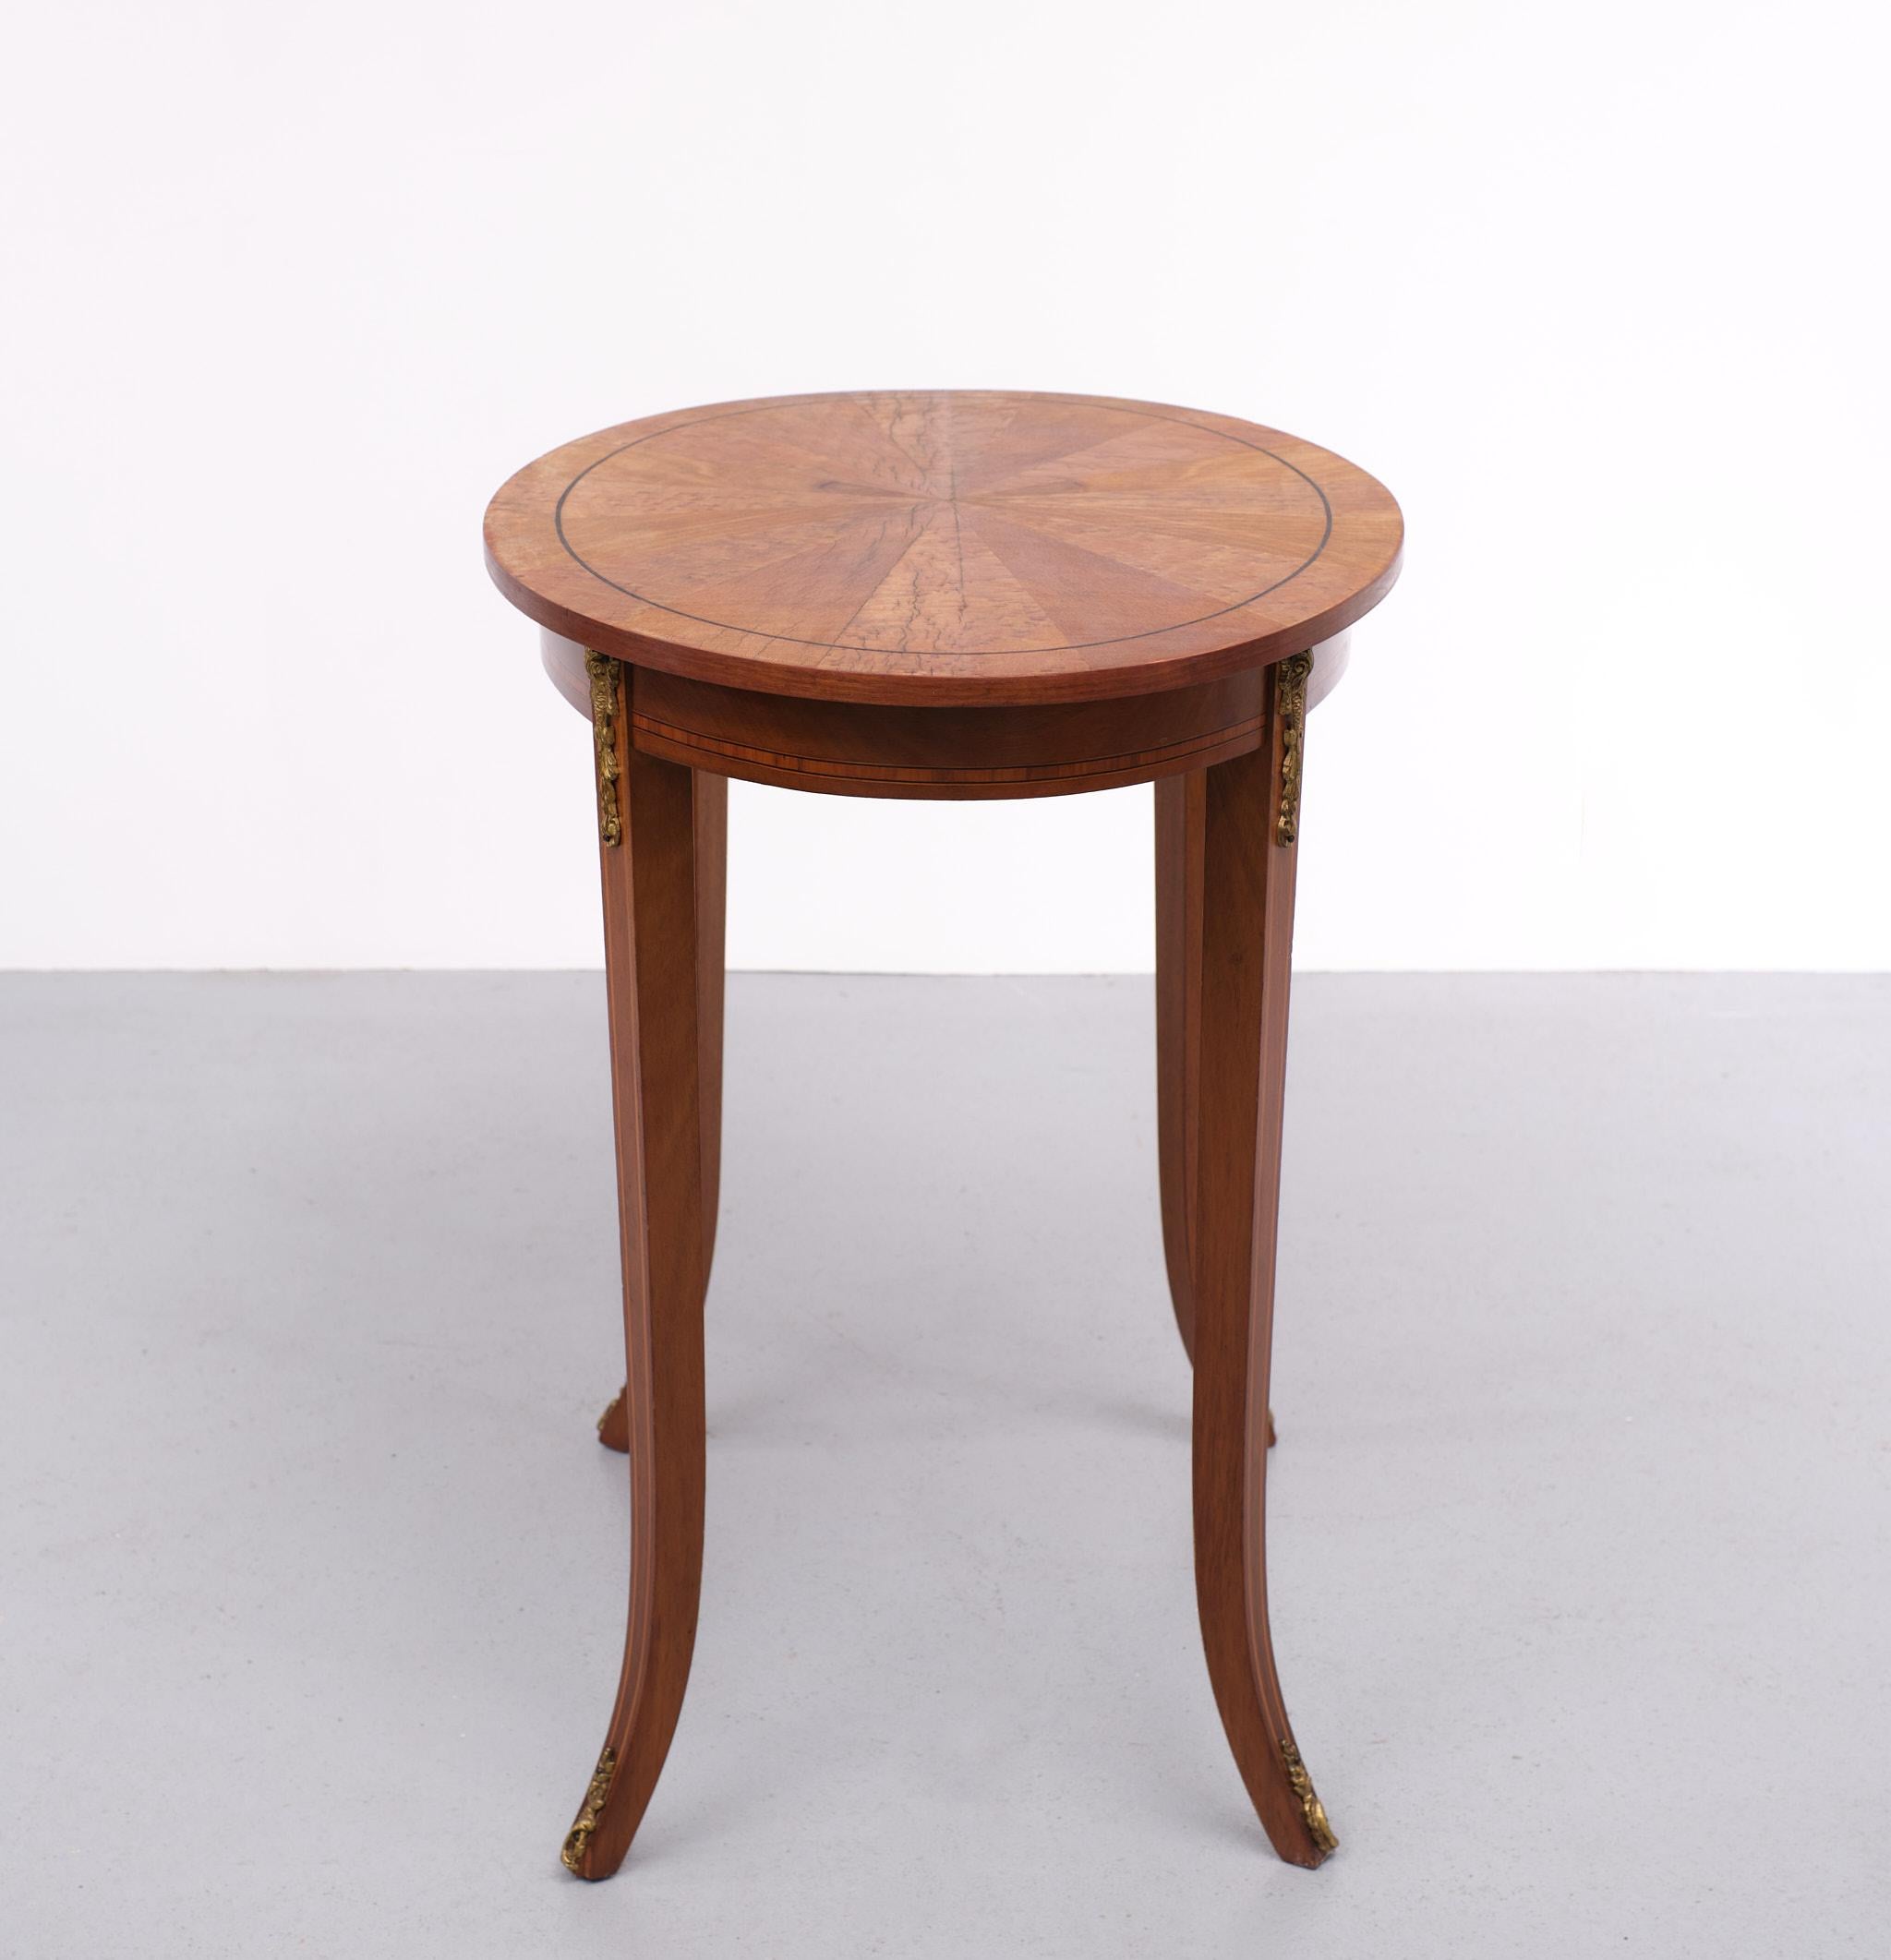 Very nice Antique France center table. Oval shape. Nut and burl wood Star shape inlay. 
Nice bronze ormolu mounts. Beautiful elegant table.